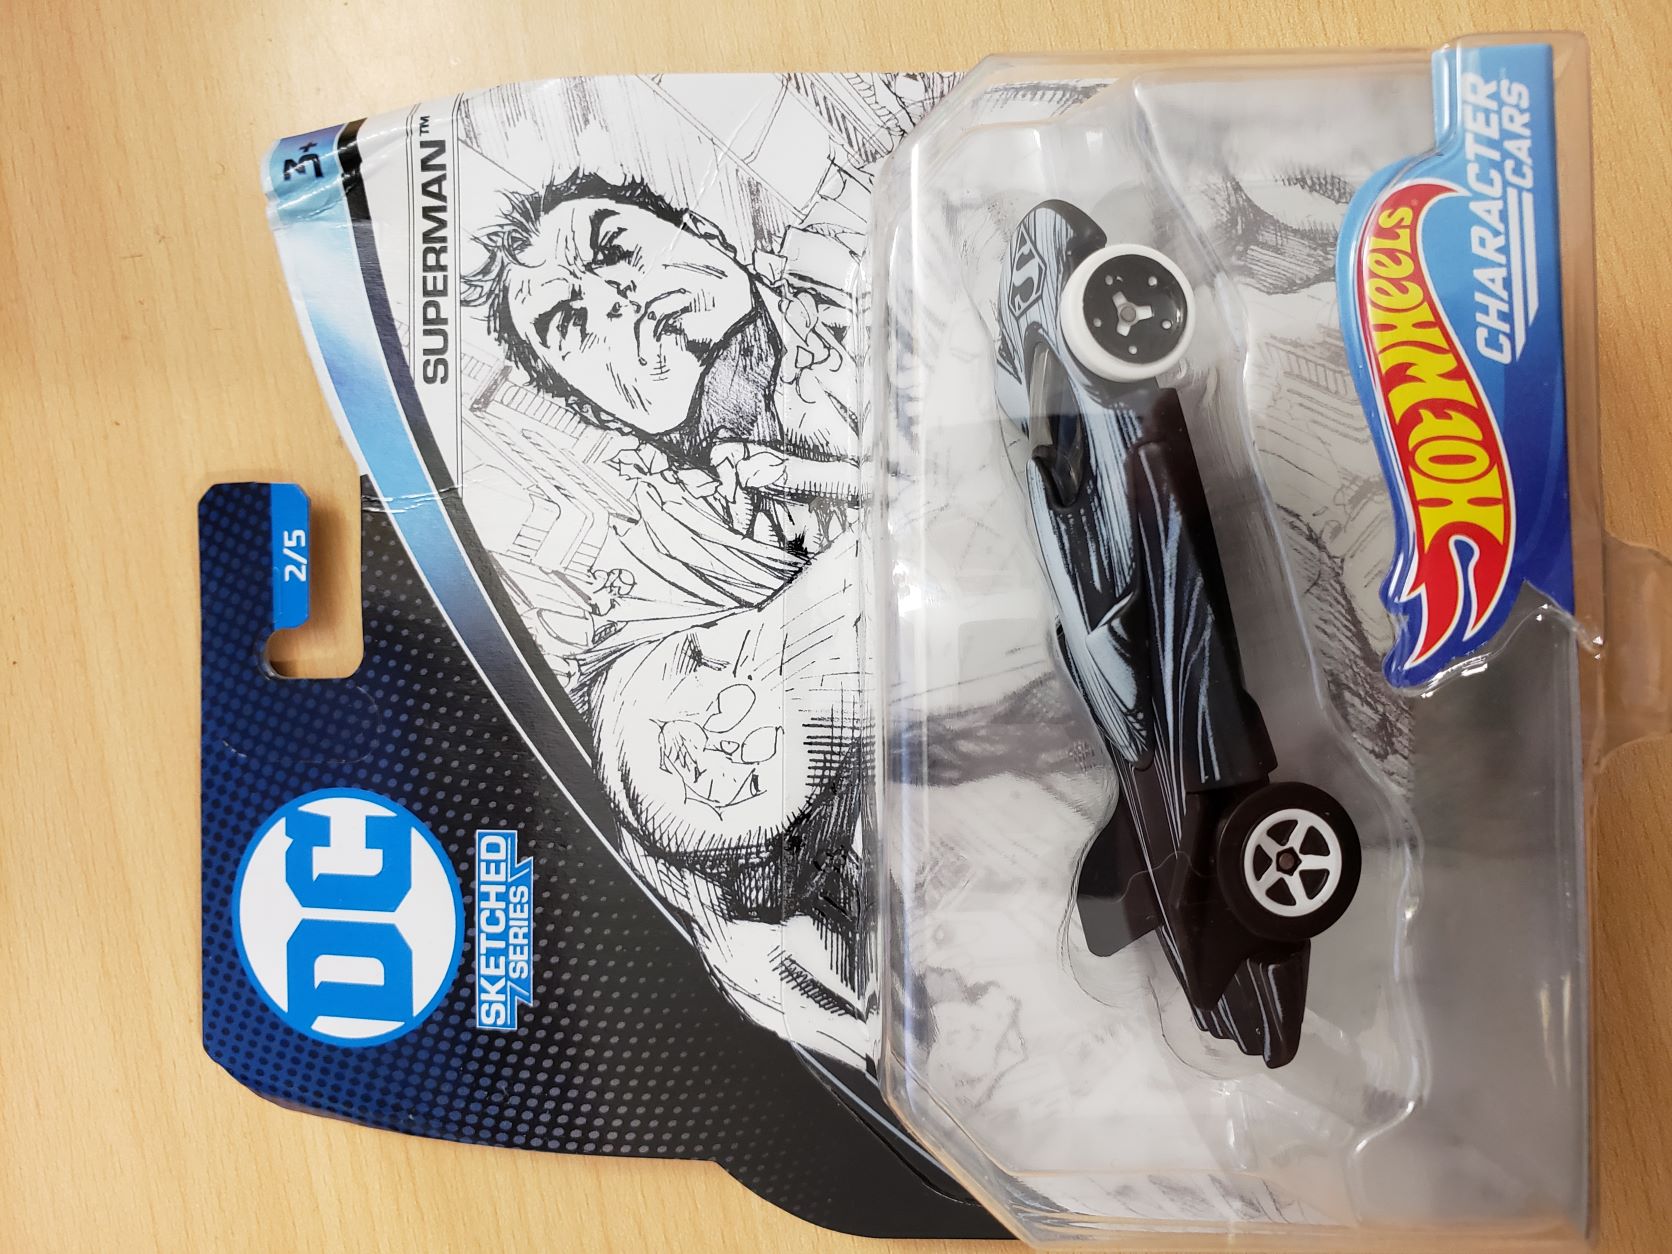 hot-wheels-character-cars-dc-comics-sketched-series-superman-01.jpg